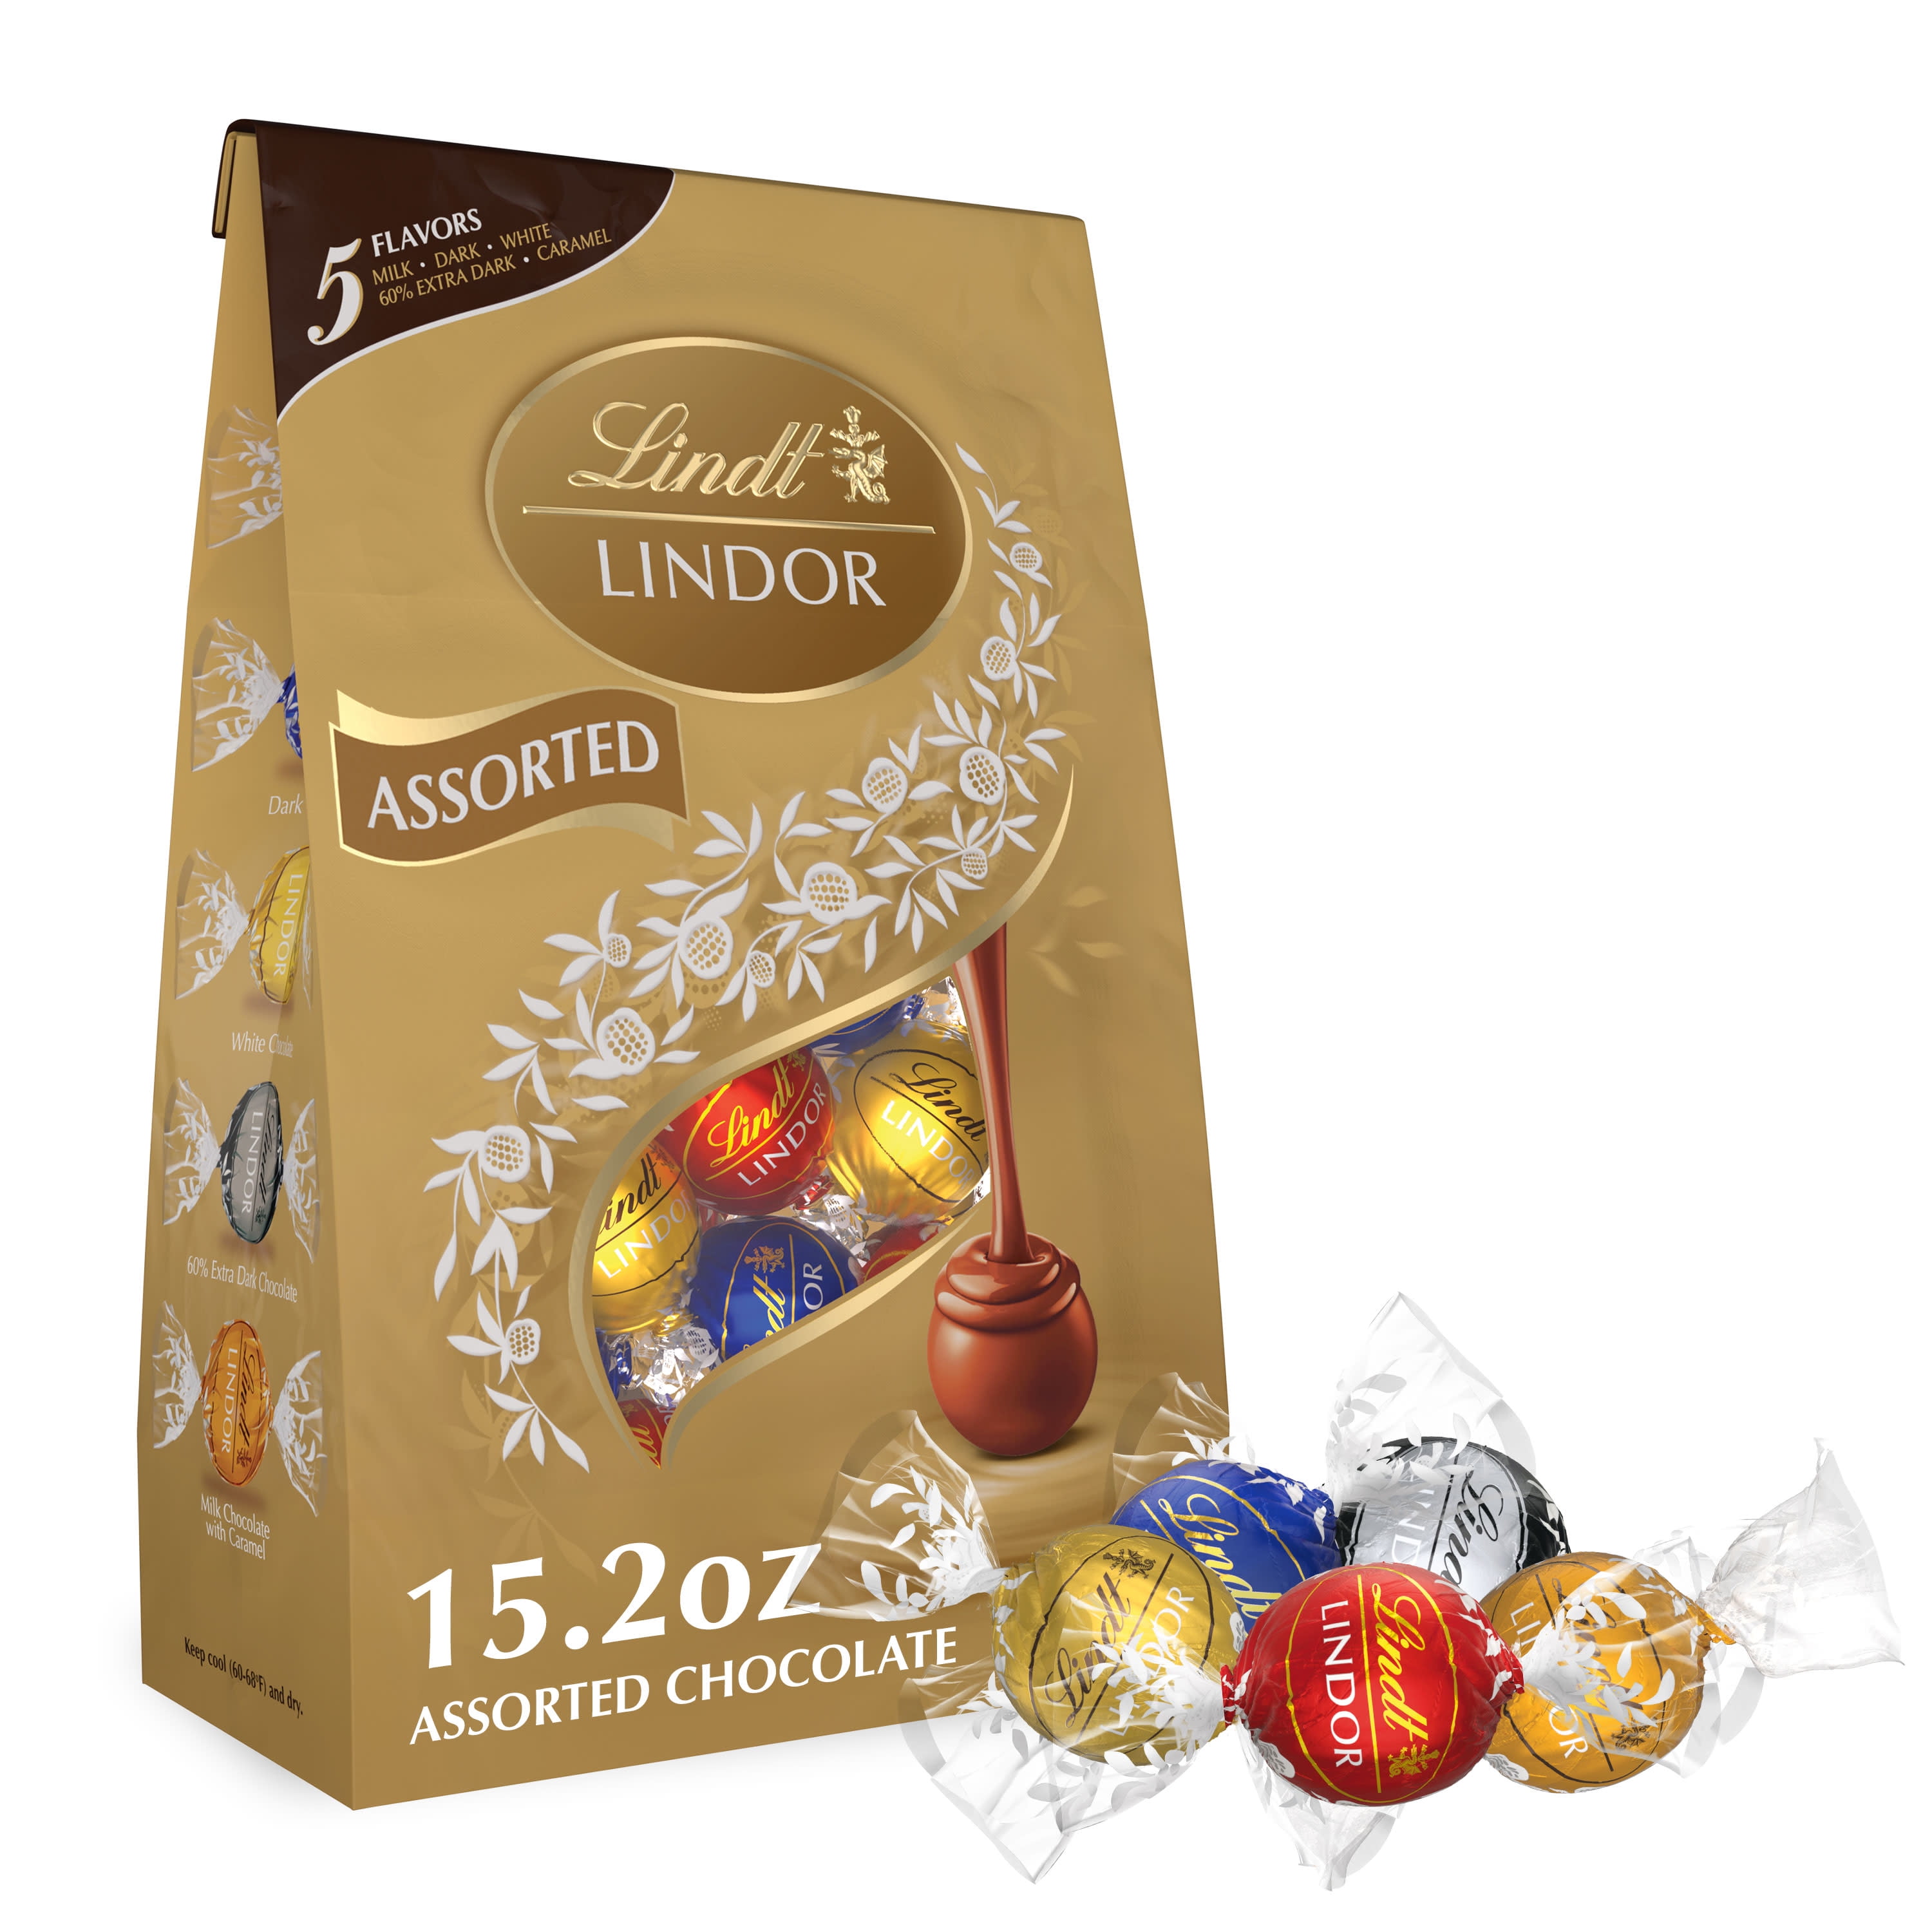 Lindt lindor chocolat blanc bonbons truffes, 15,2 oz